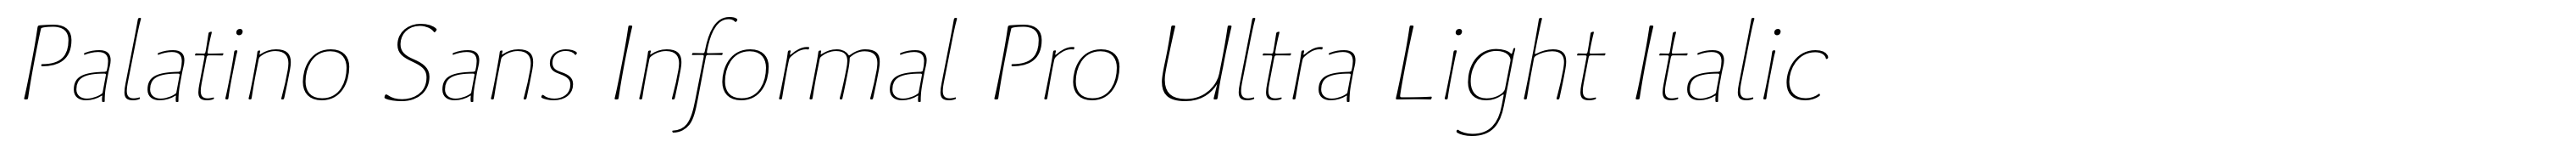 Palatino Sans Informal Pro Ultra Light Italic